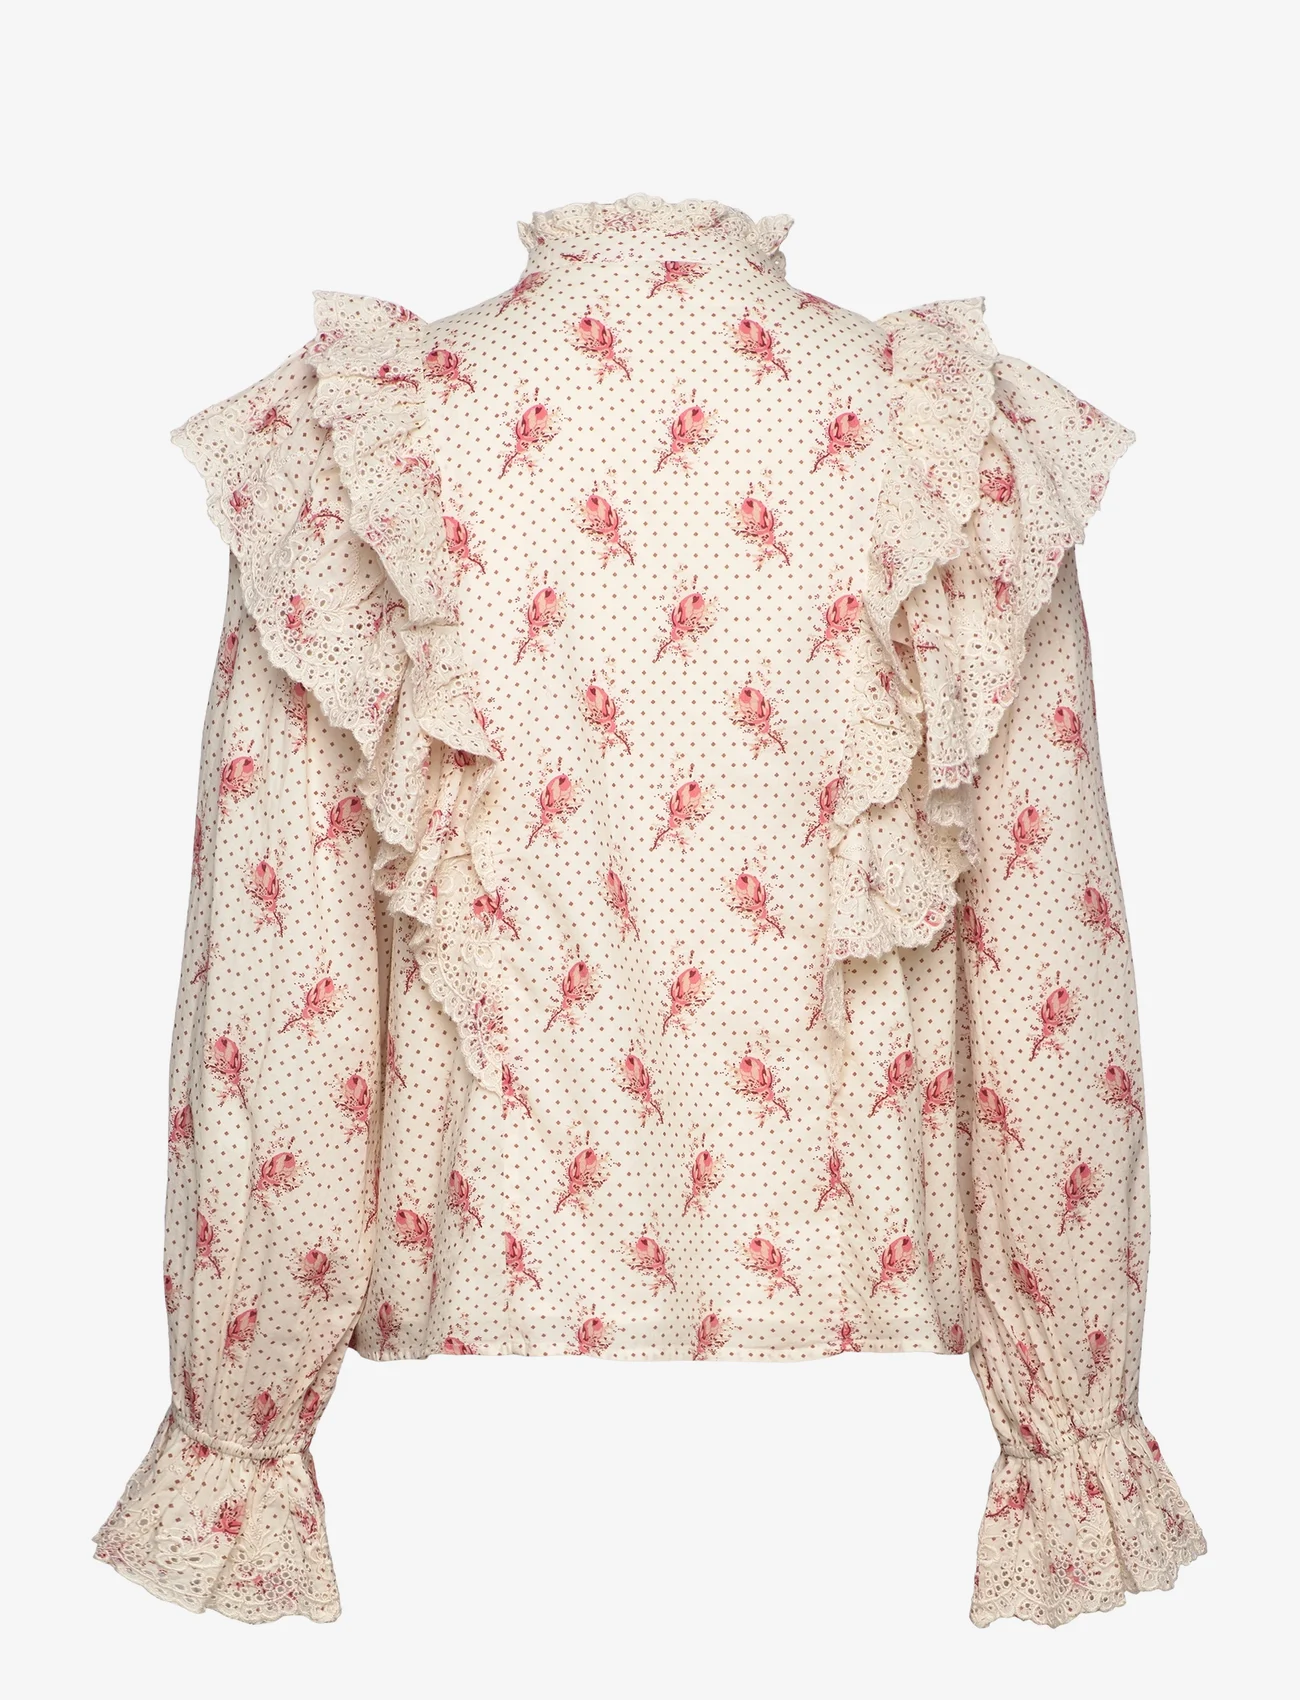 Notes du Nord - Filippa Shirt P - long-sleeved blouses - vintage rose - 1